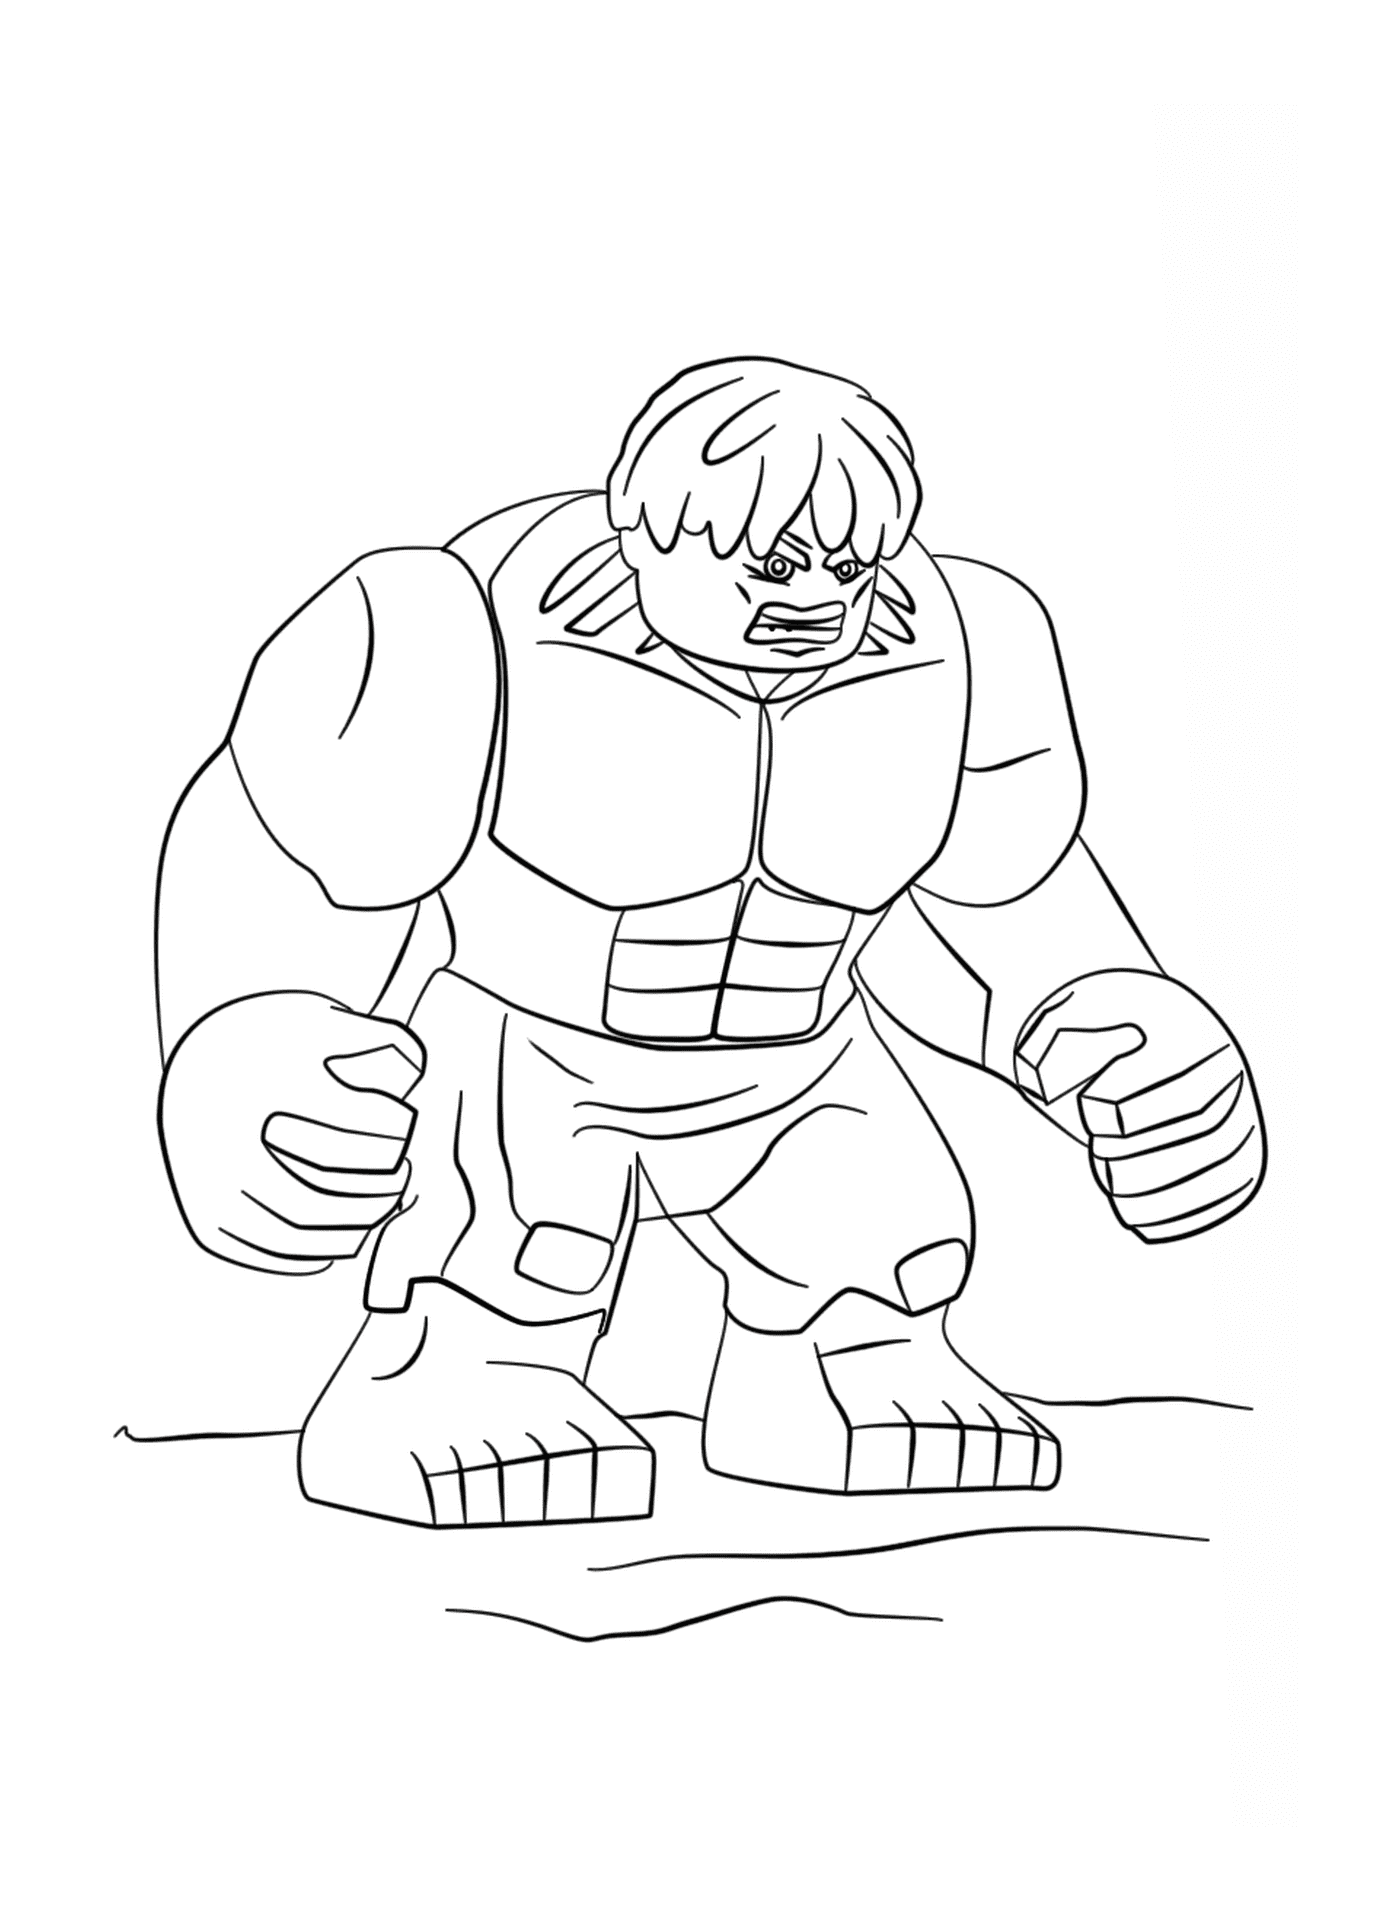  Hulk, a massive body 